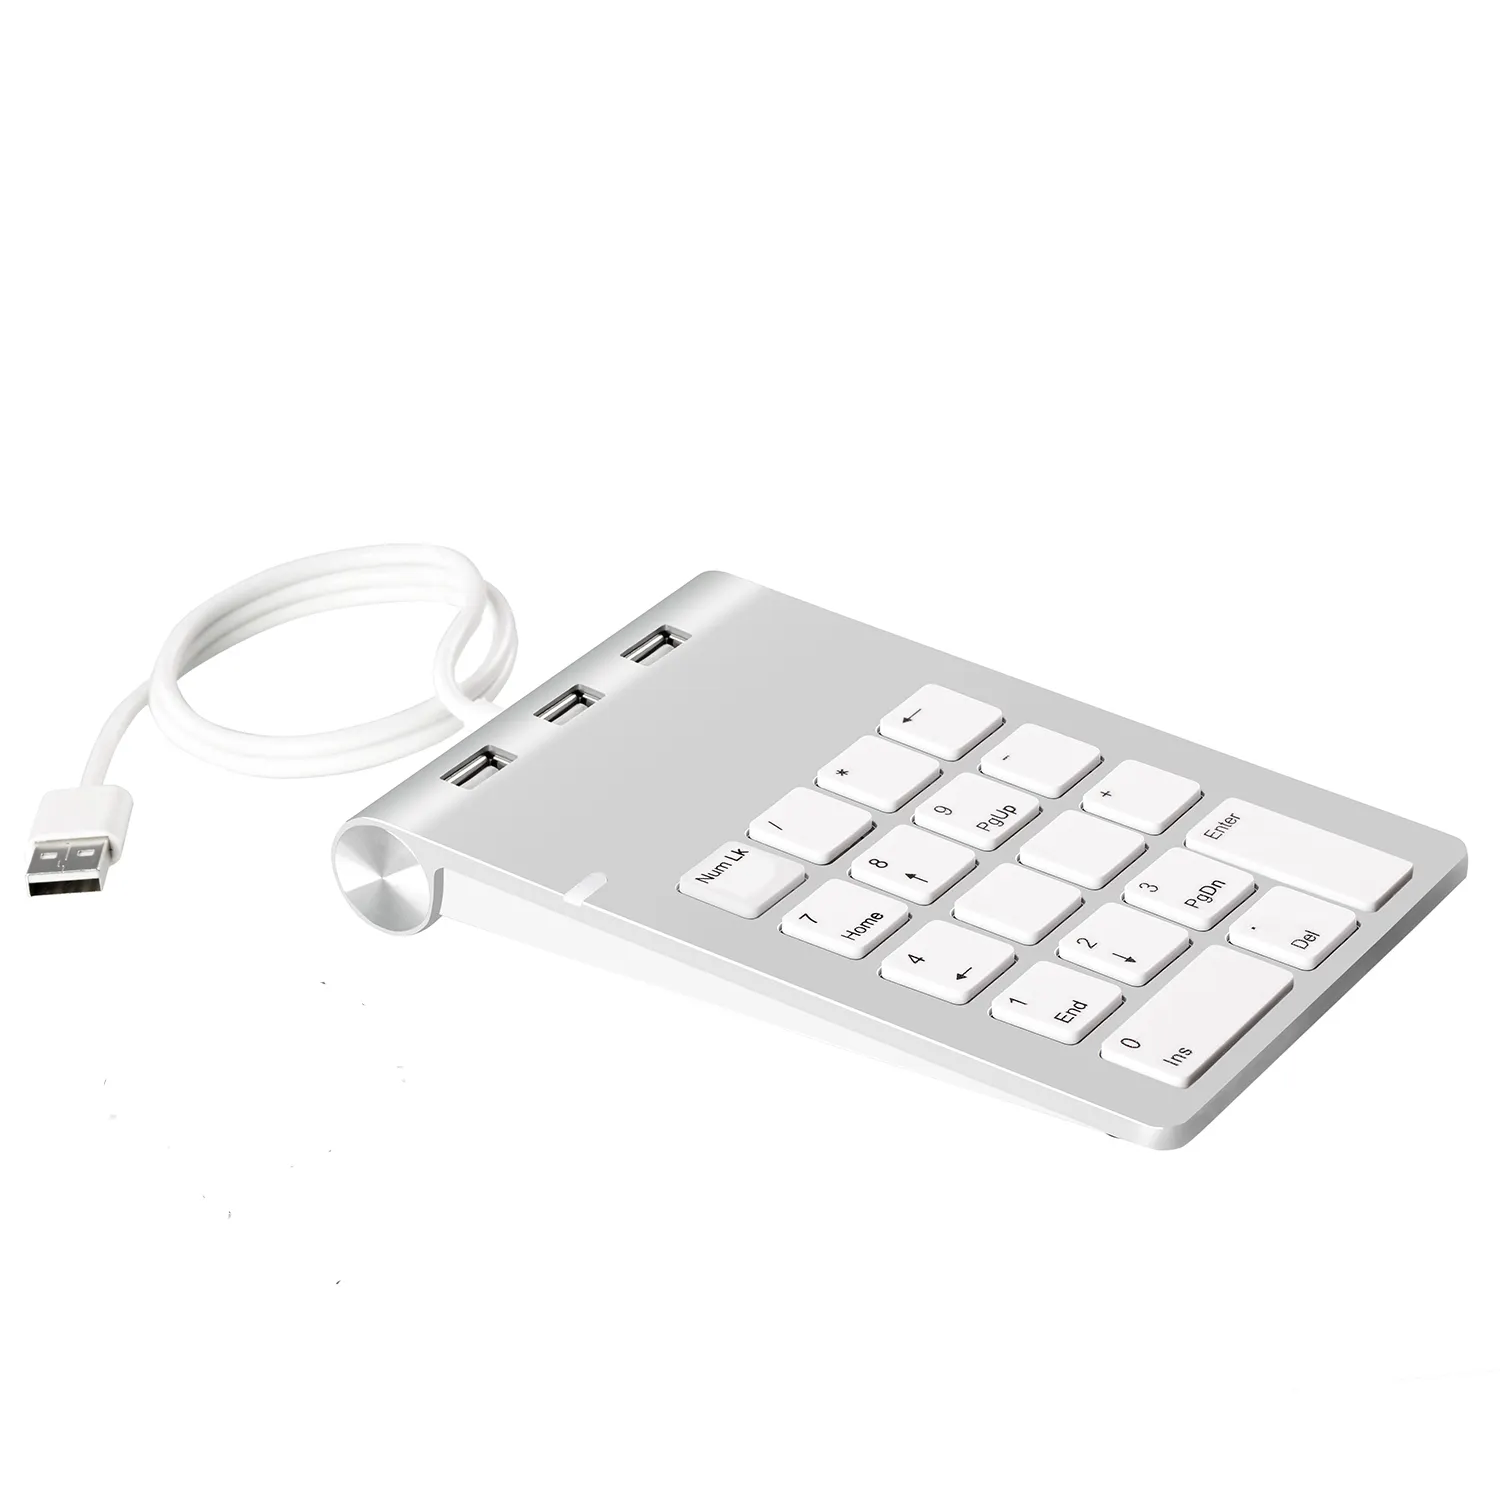 OEM سعر المصنع مصغرة USB 2.0 محور سلك لوحة رقمية لوحة المفاتيح 18 مفاتيح رقمية مصغرة USB لوحة المفاتيح لأجهزة الكمبيوتر المحمول